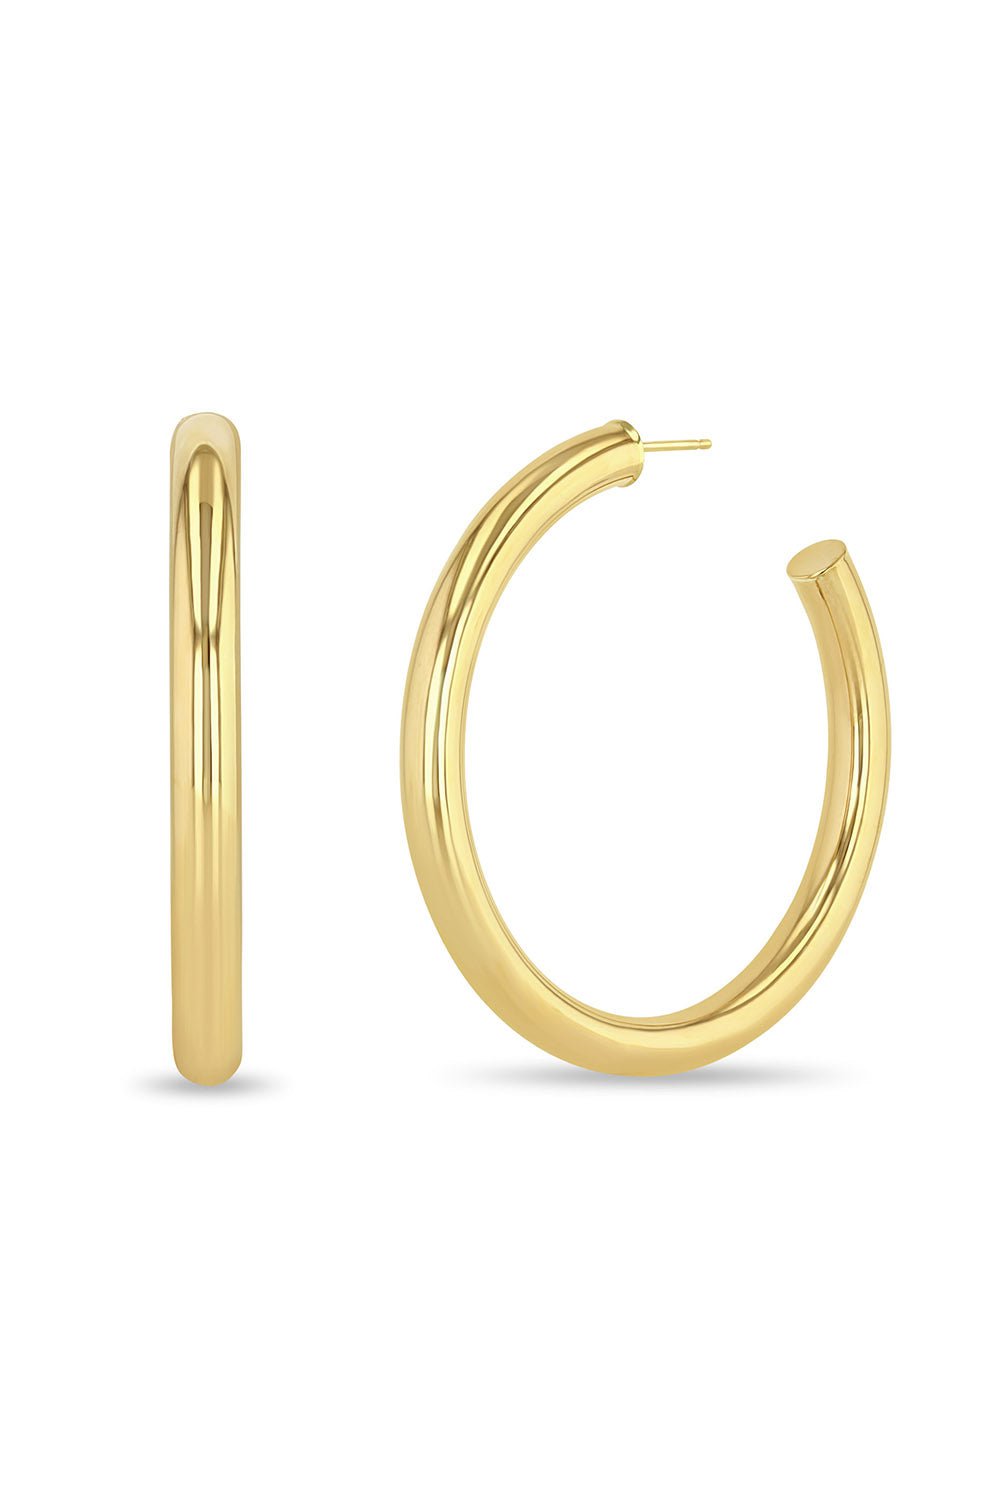 ZOE CHICCO-Large Tube Hoop Earrings-YELLOW GOLD